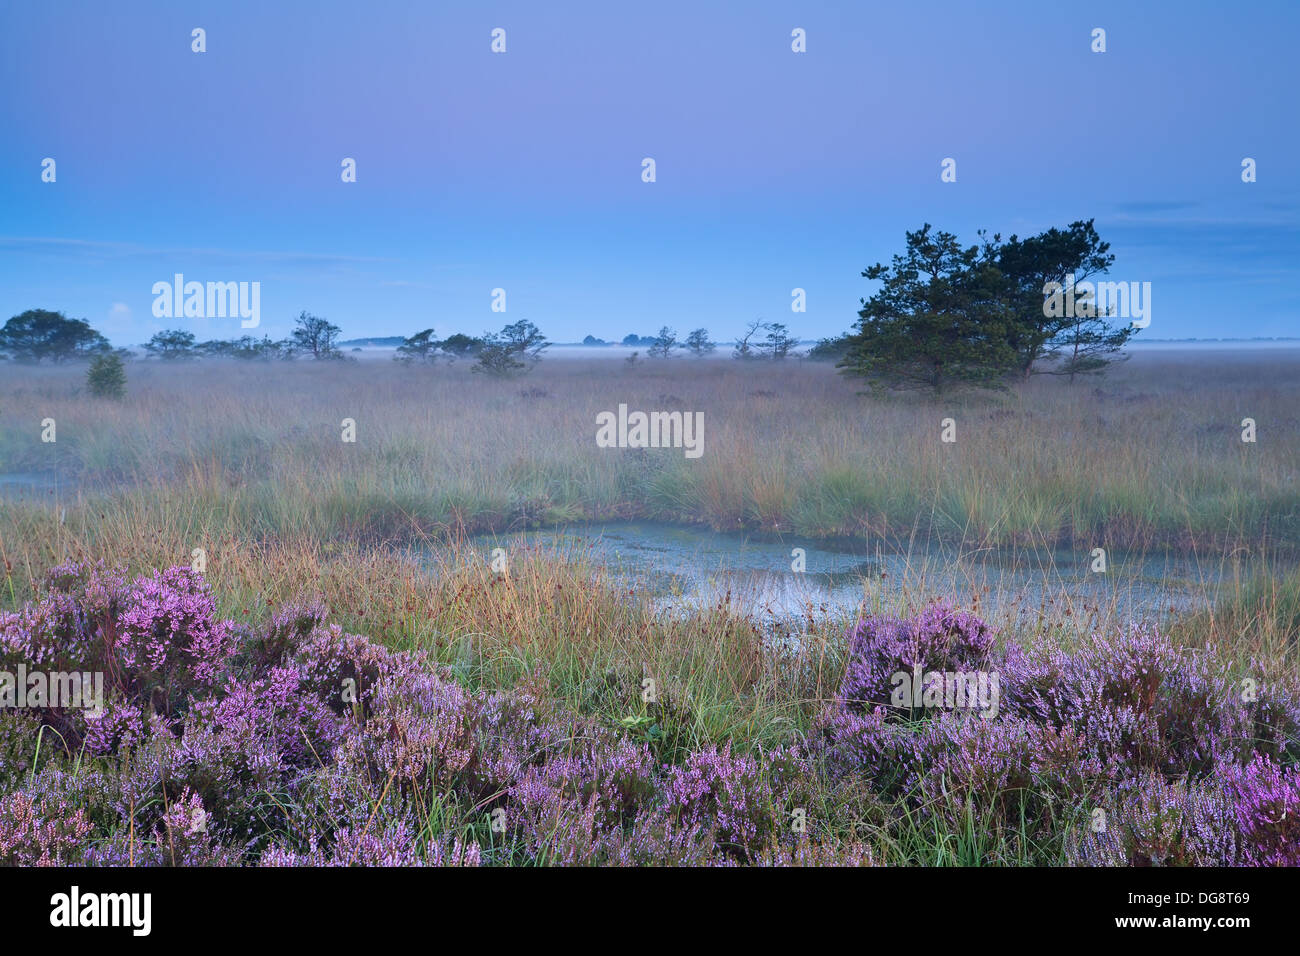 pink flowering heather during misty early morning, Fochteloerveen, Netherlands Stock Photo